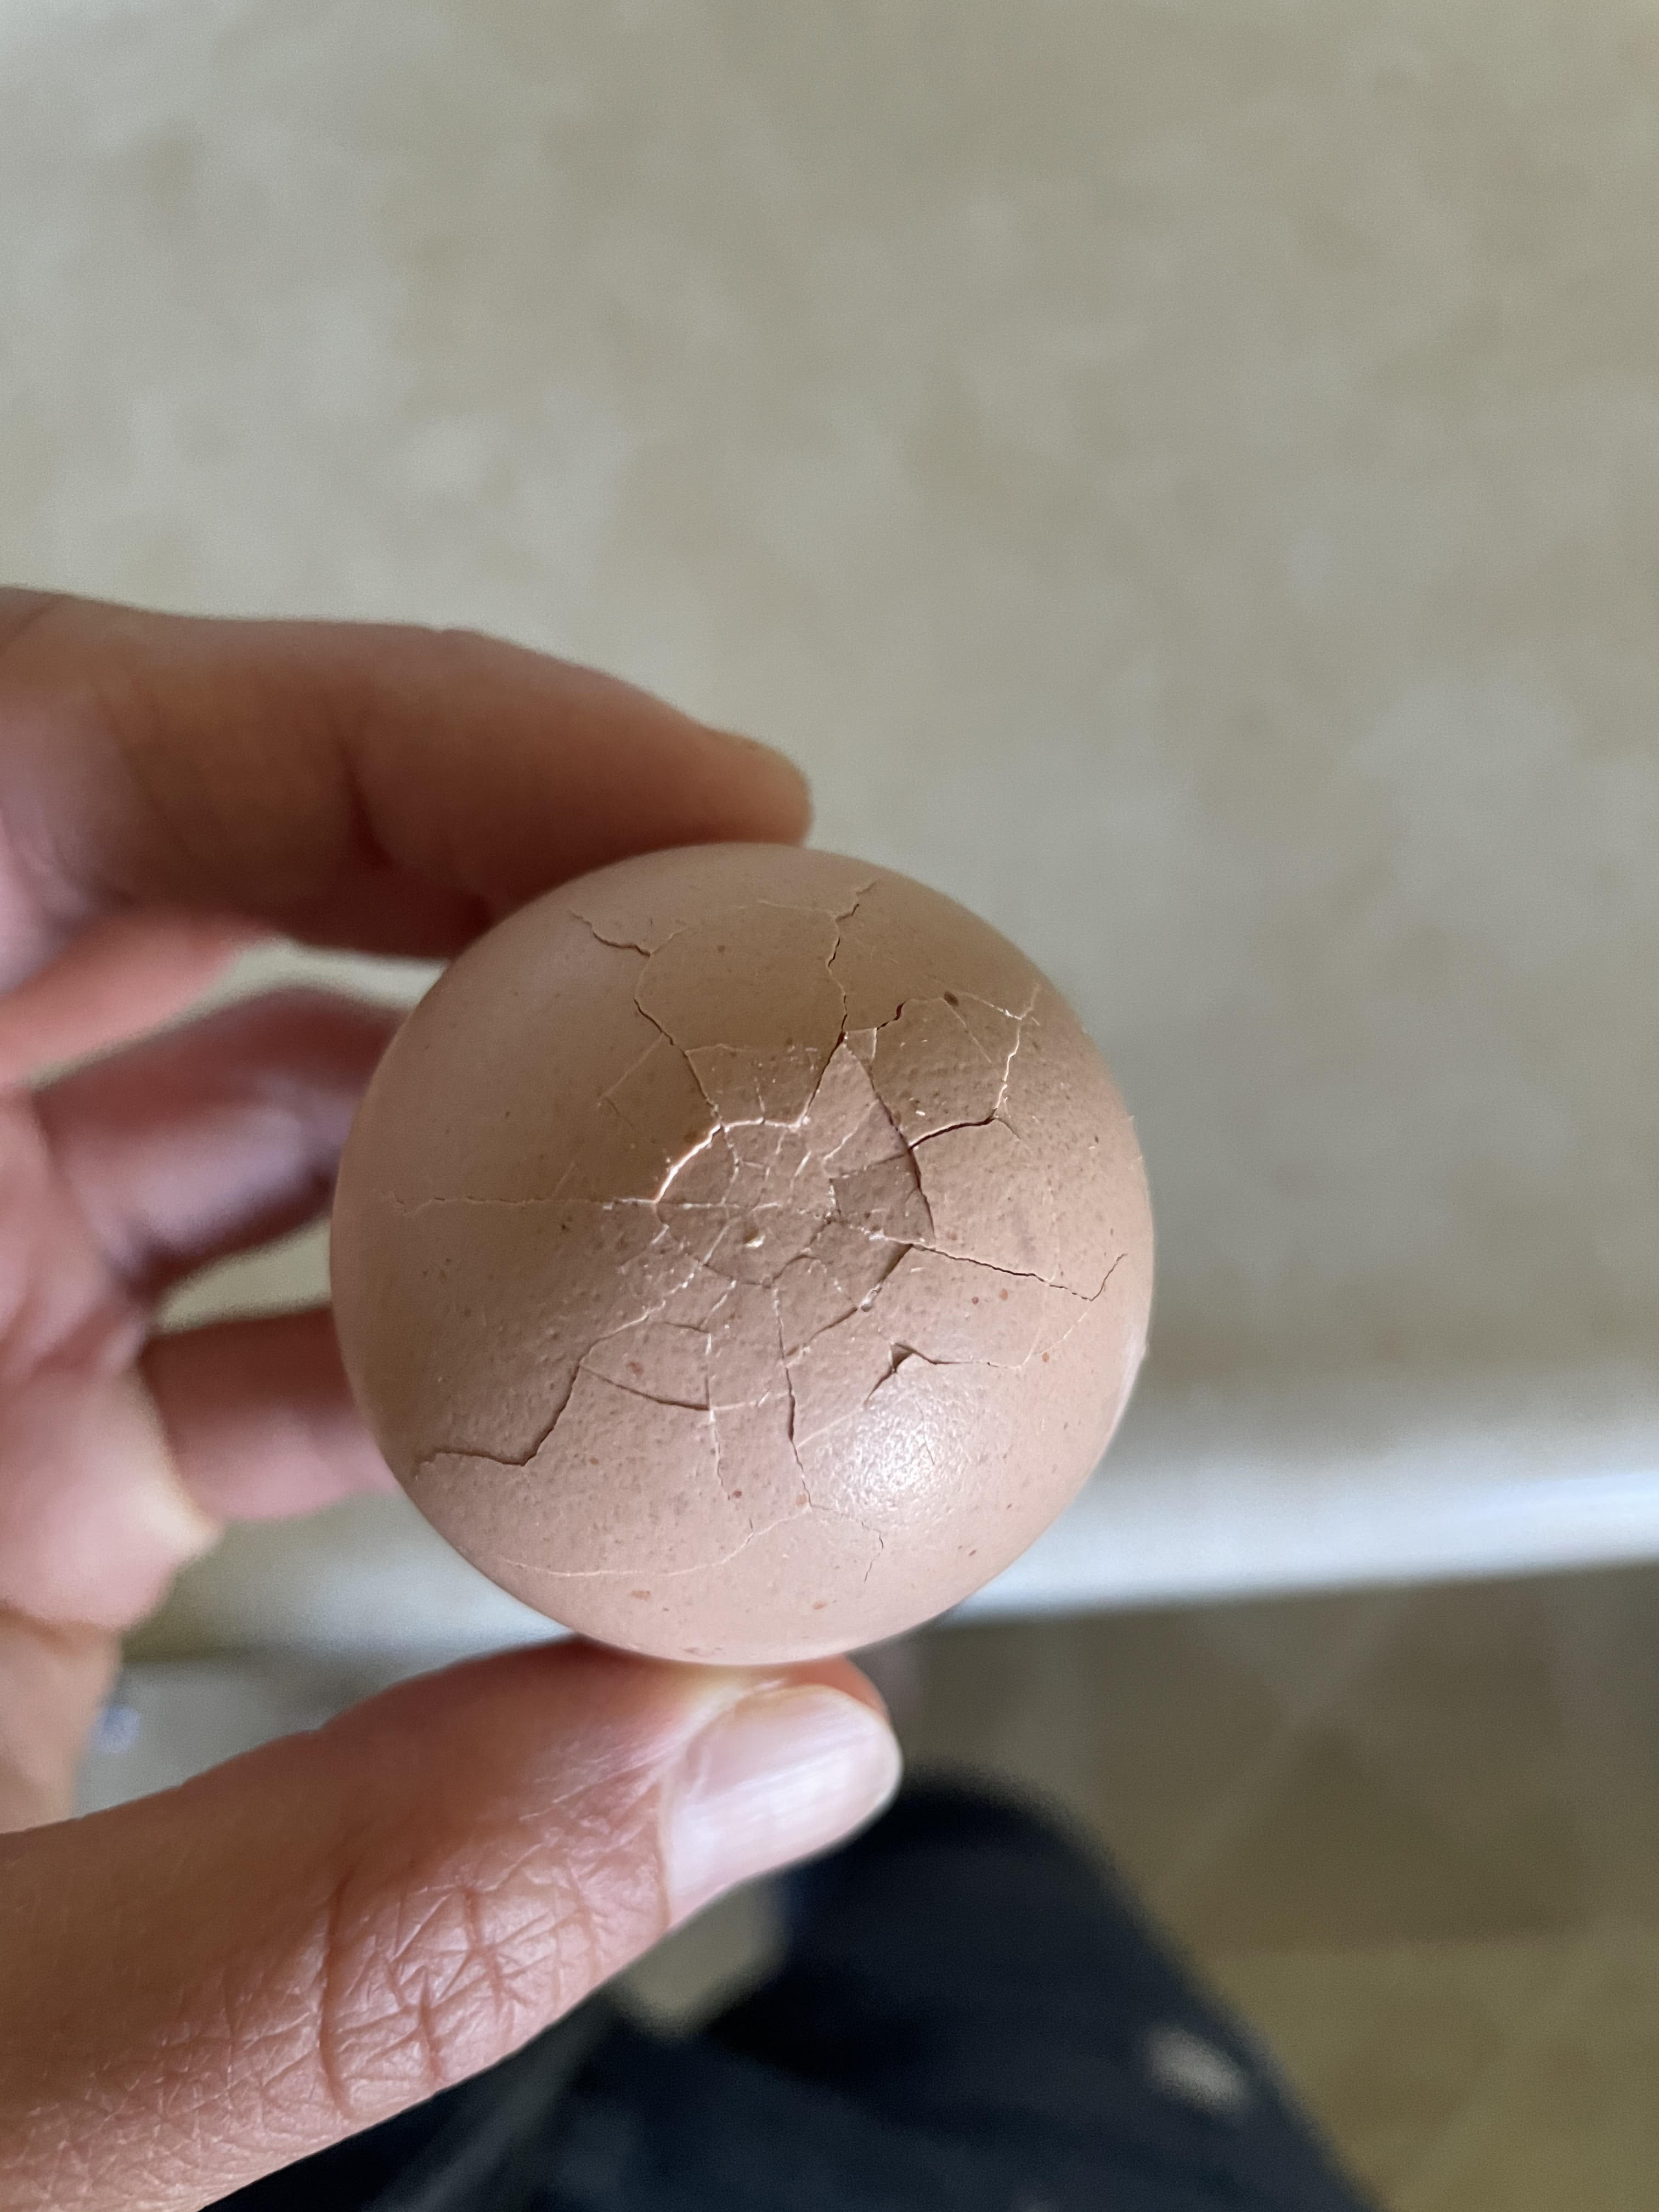 I Tried the Annoyingly Brilliant TikTok Trick for Peeling Hard-Boiled Eggs